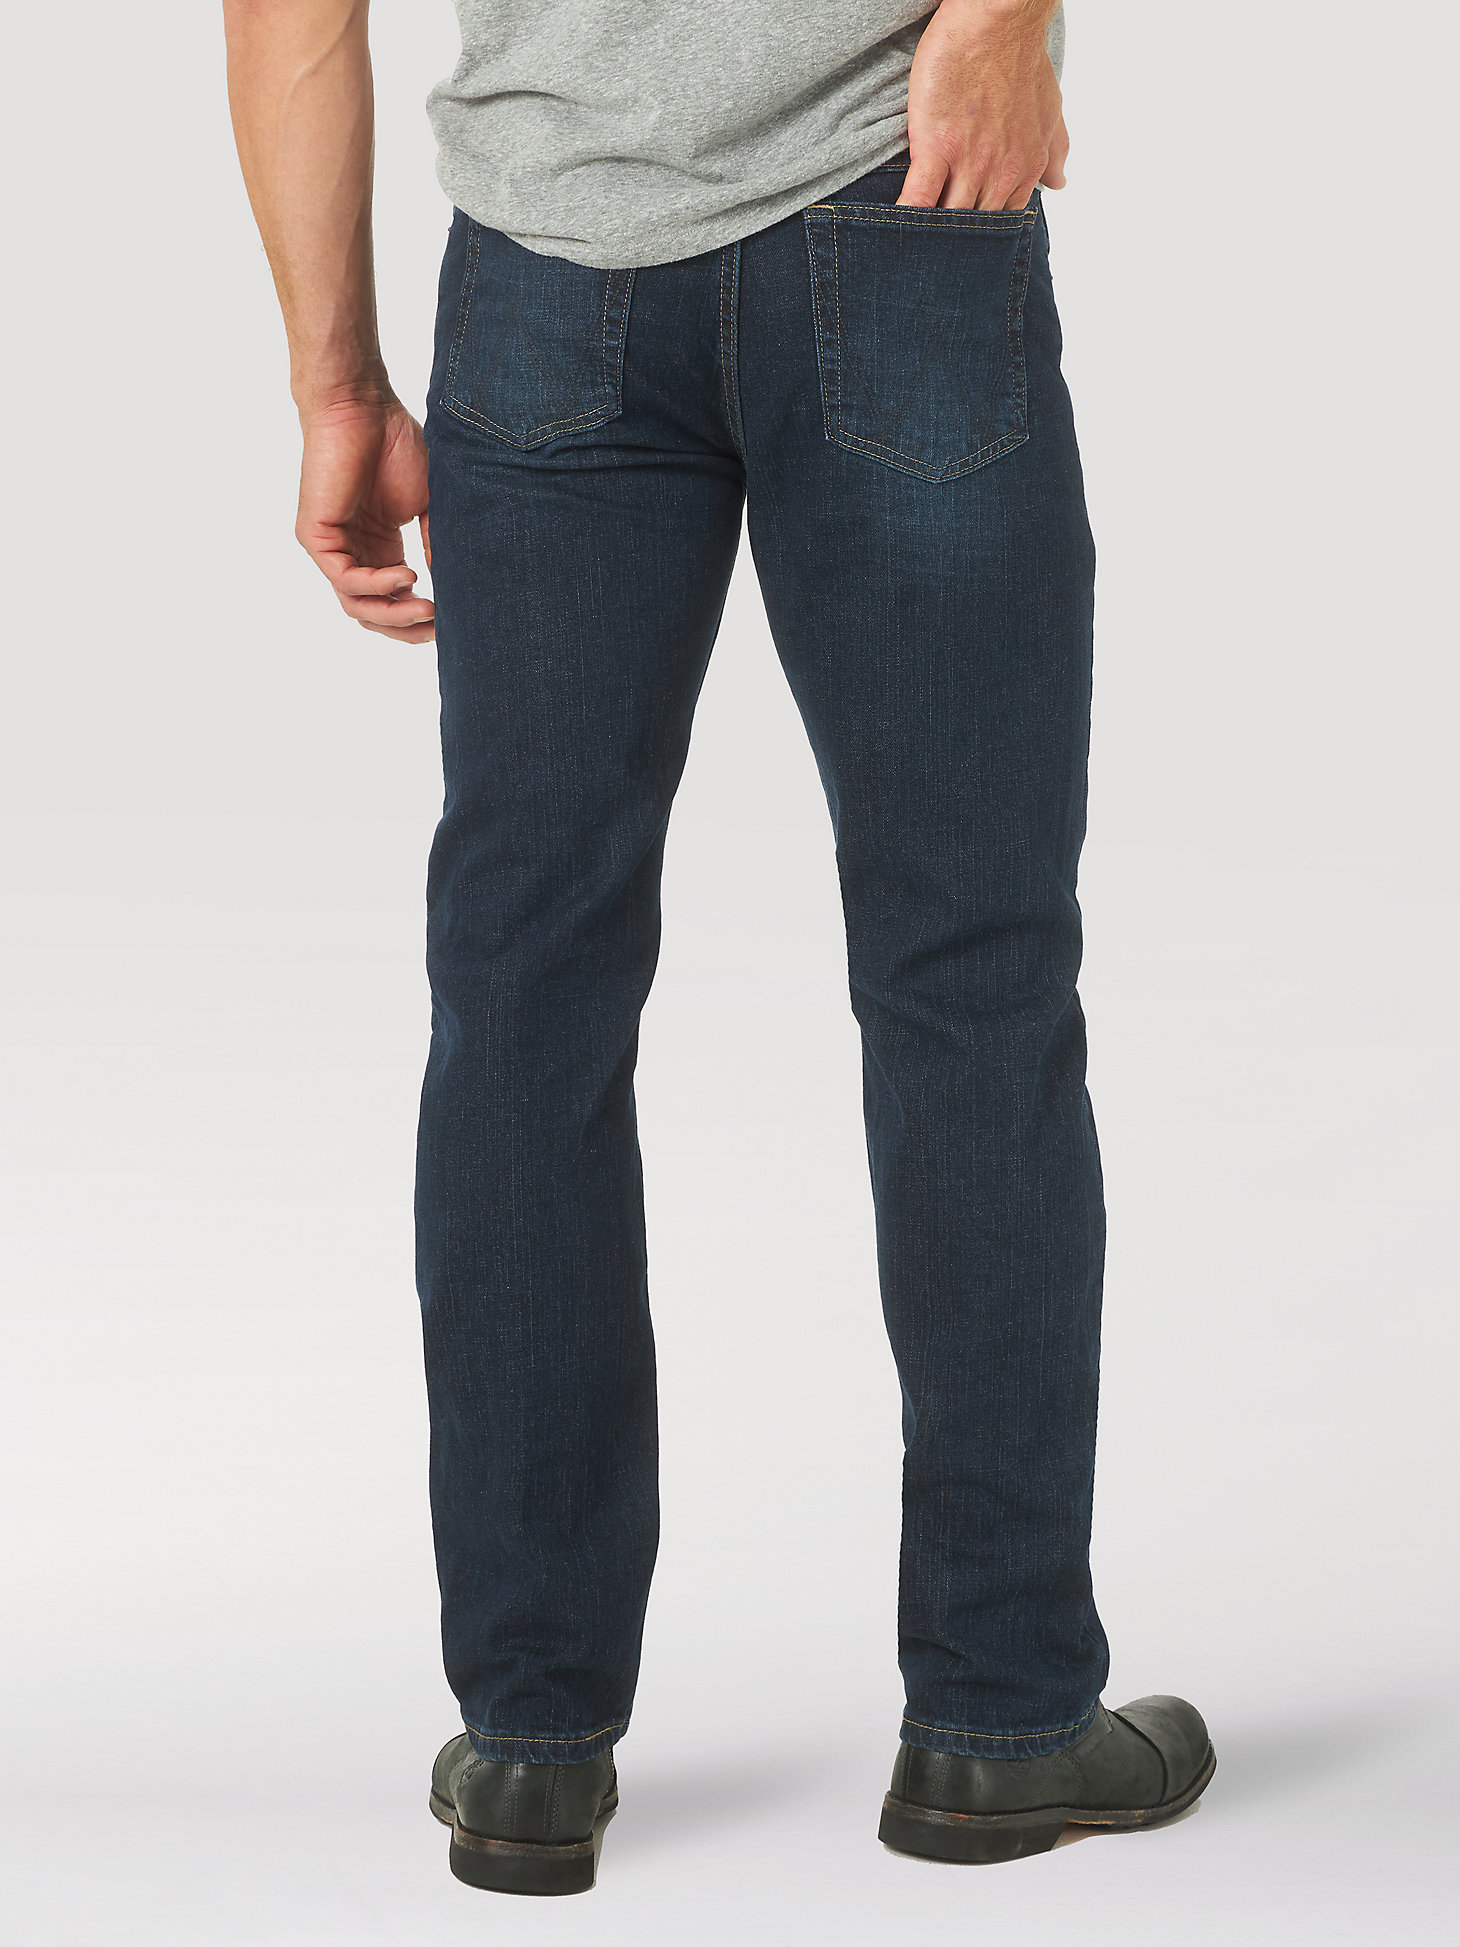 Men's Regular Fit Flex Jean in Blackened Indigo alternative view 1